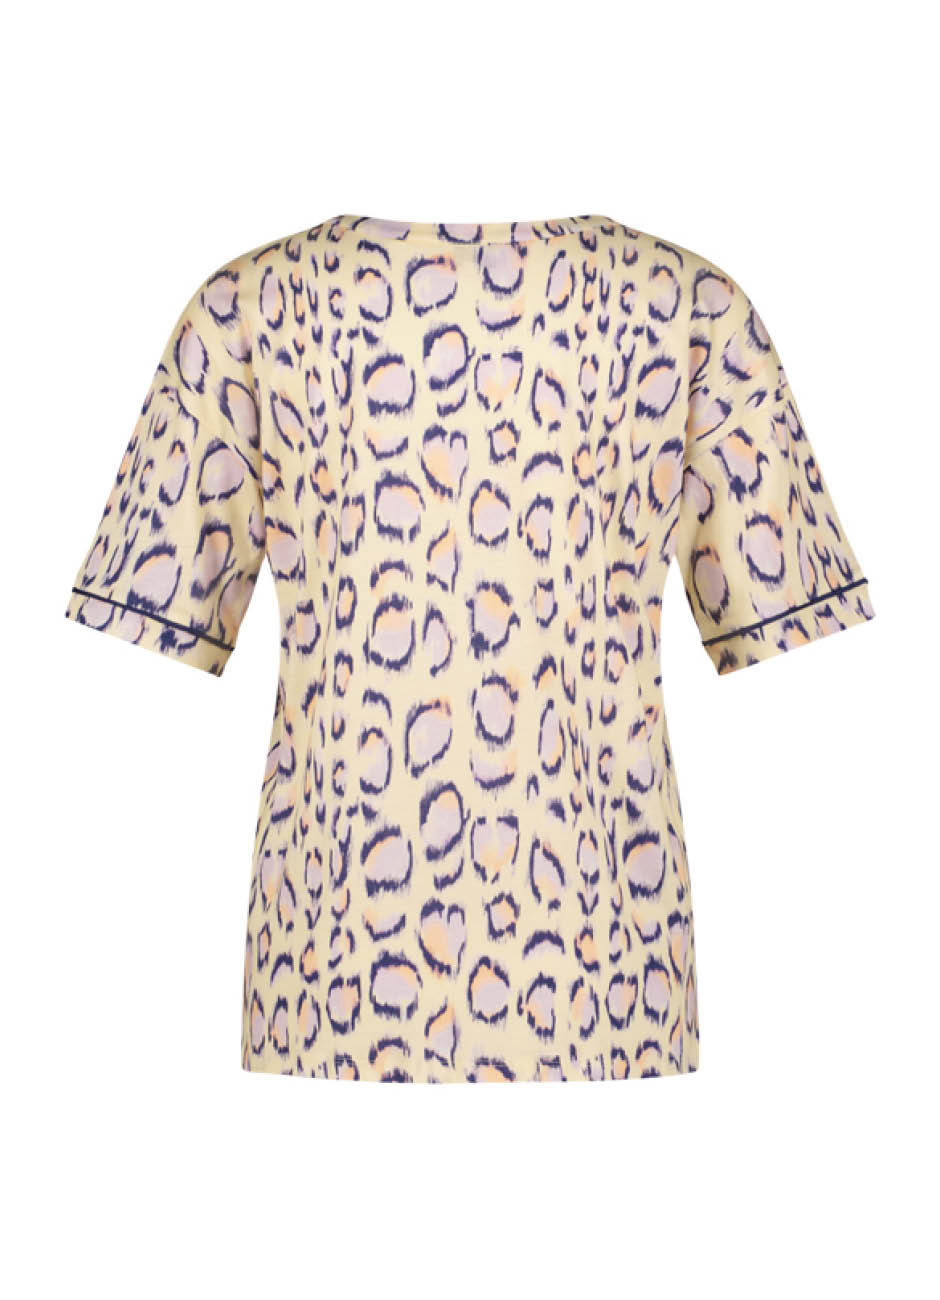 CYELL Cyell Elegant Animal shirt short sleeve 38